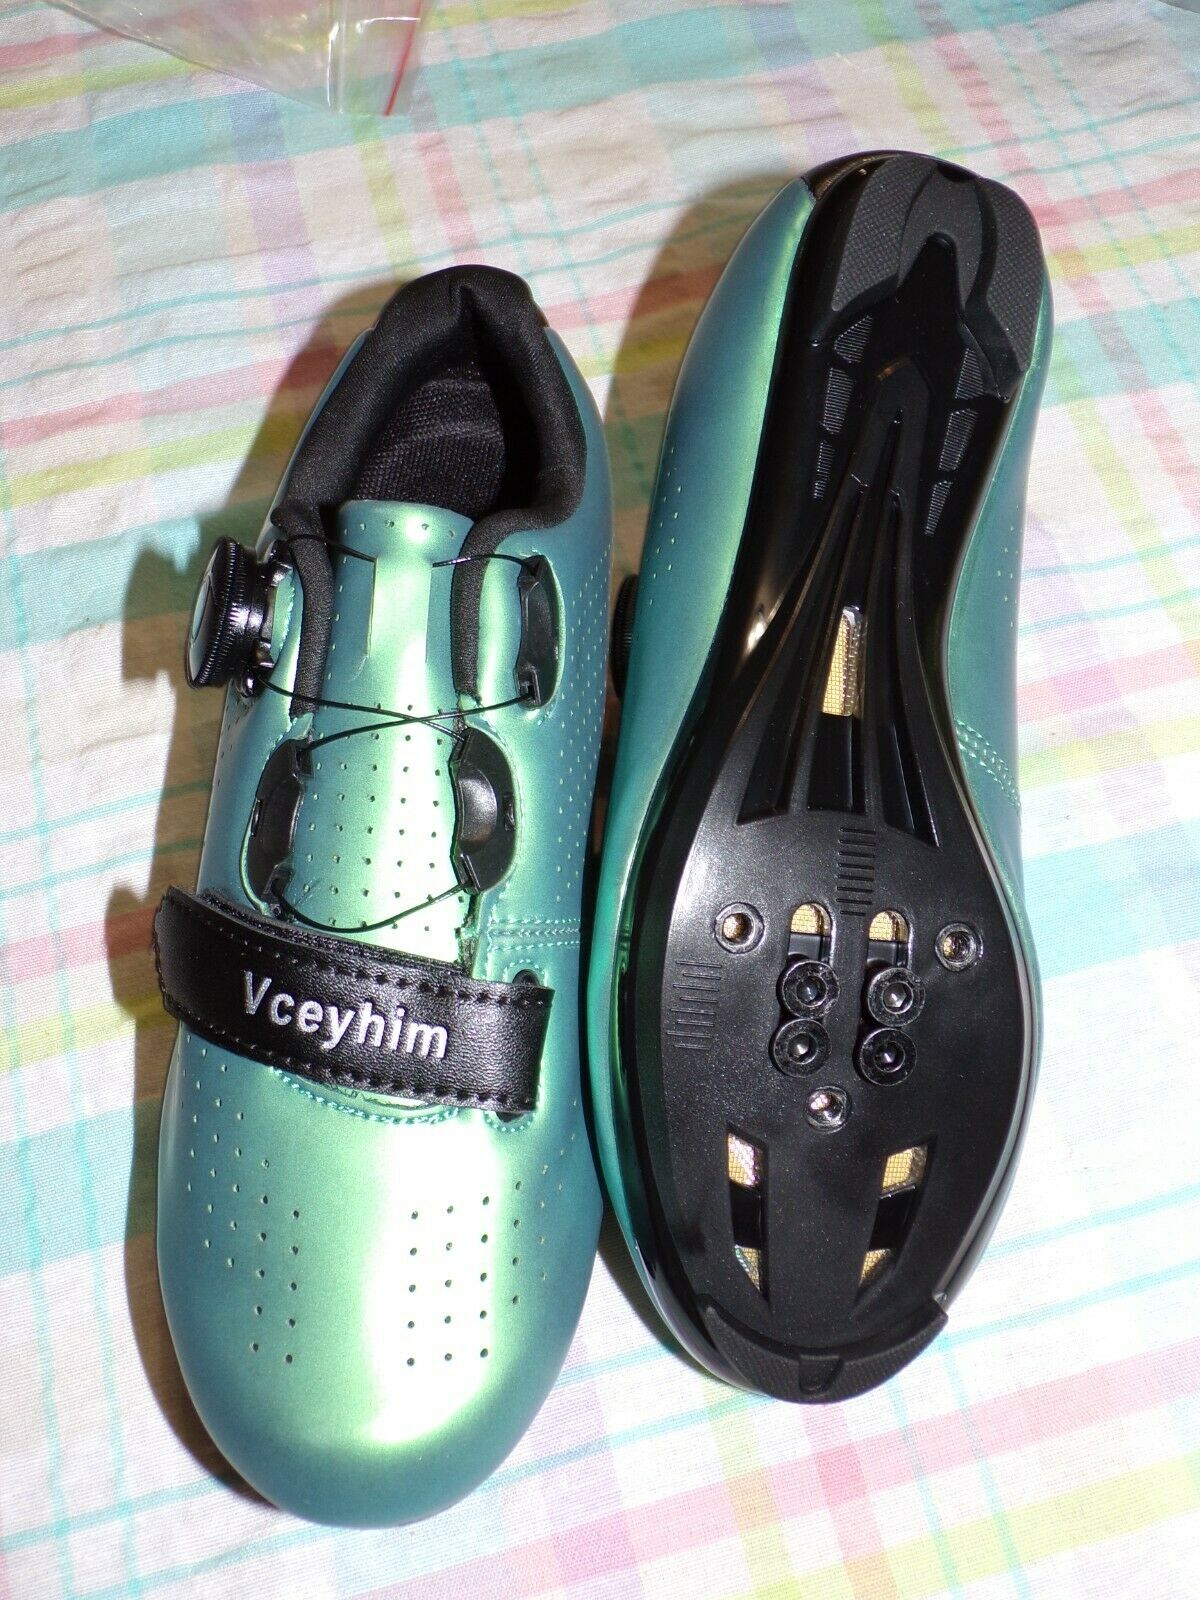 Vceyhim 37 Road Peloton Indoor Outdoor Lock Pedal Biking Shoes Delta Cleats 5.5